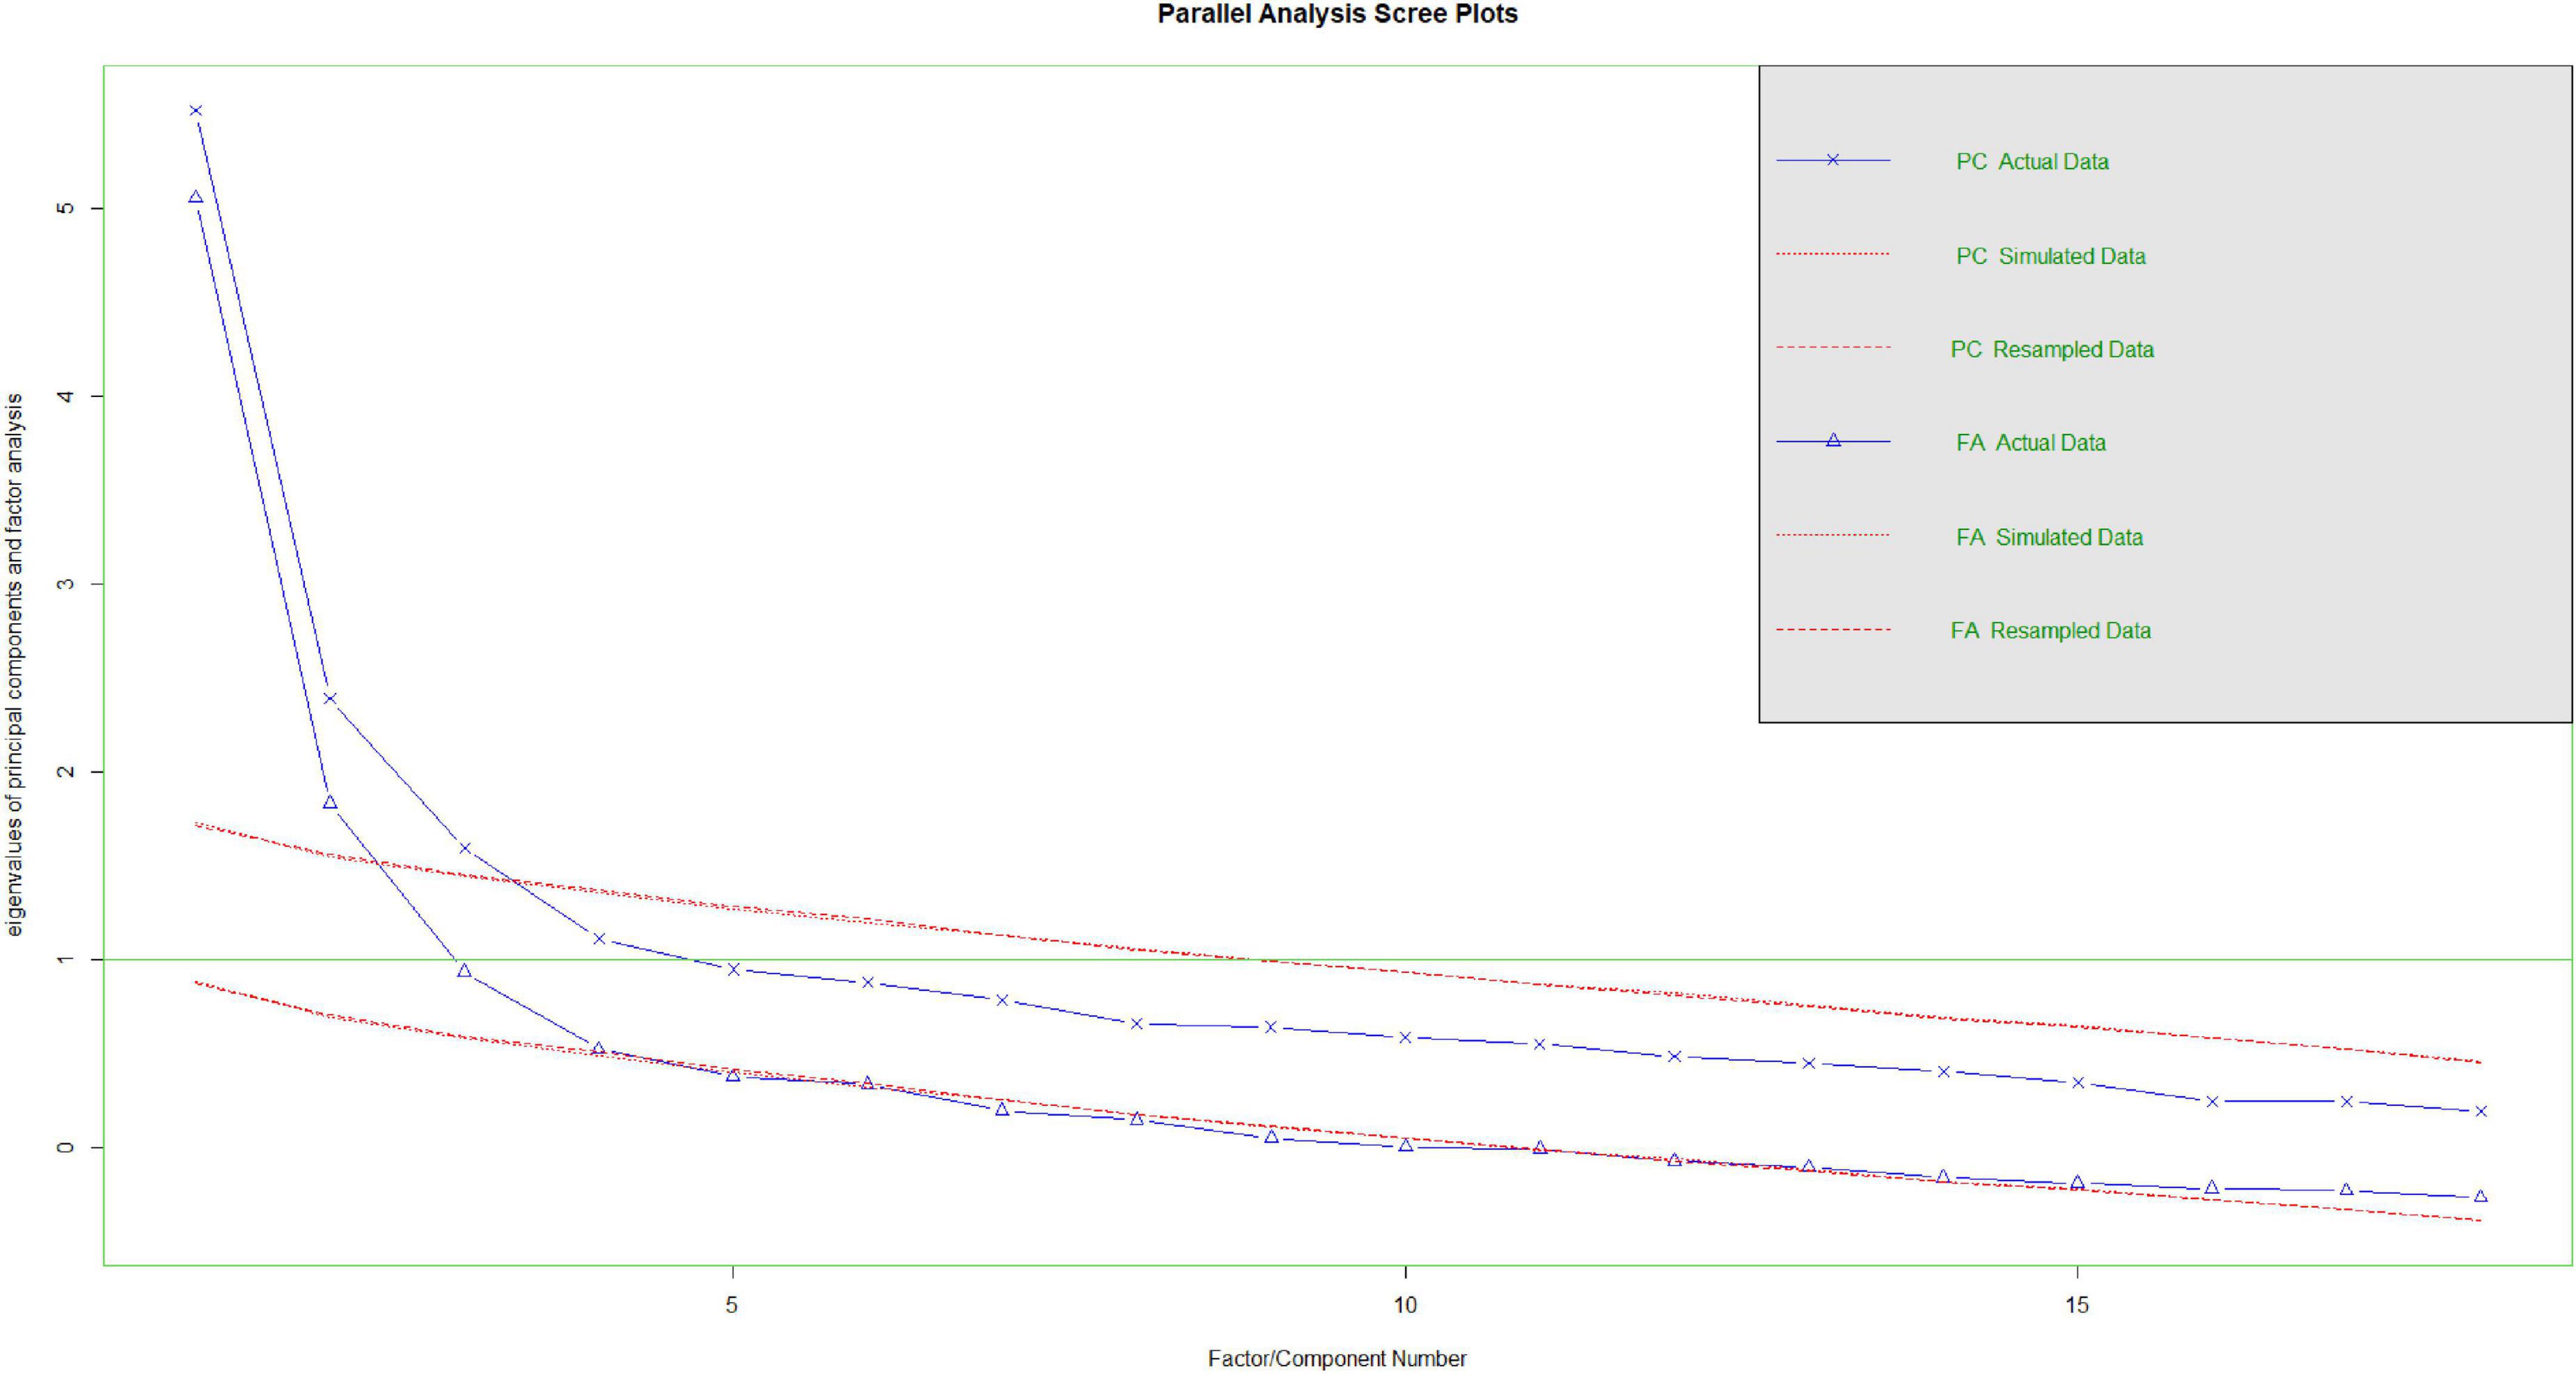 Brief Resilient Coping Scale versus Single Item Burnout Score (n ¼ 85).